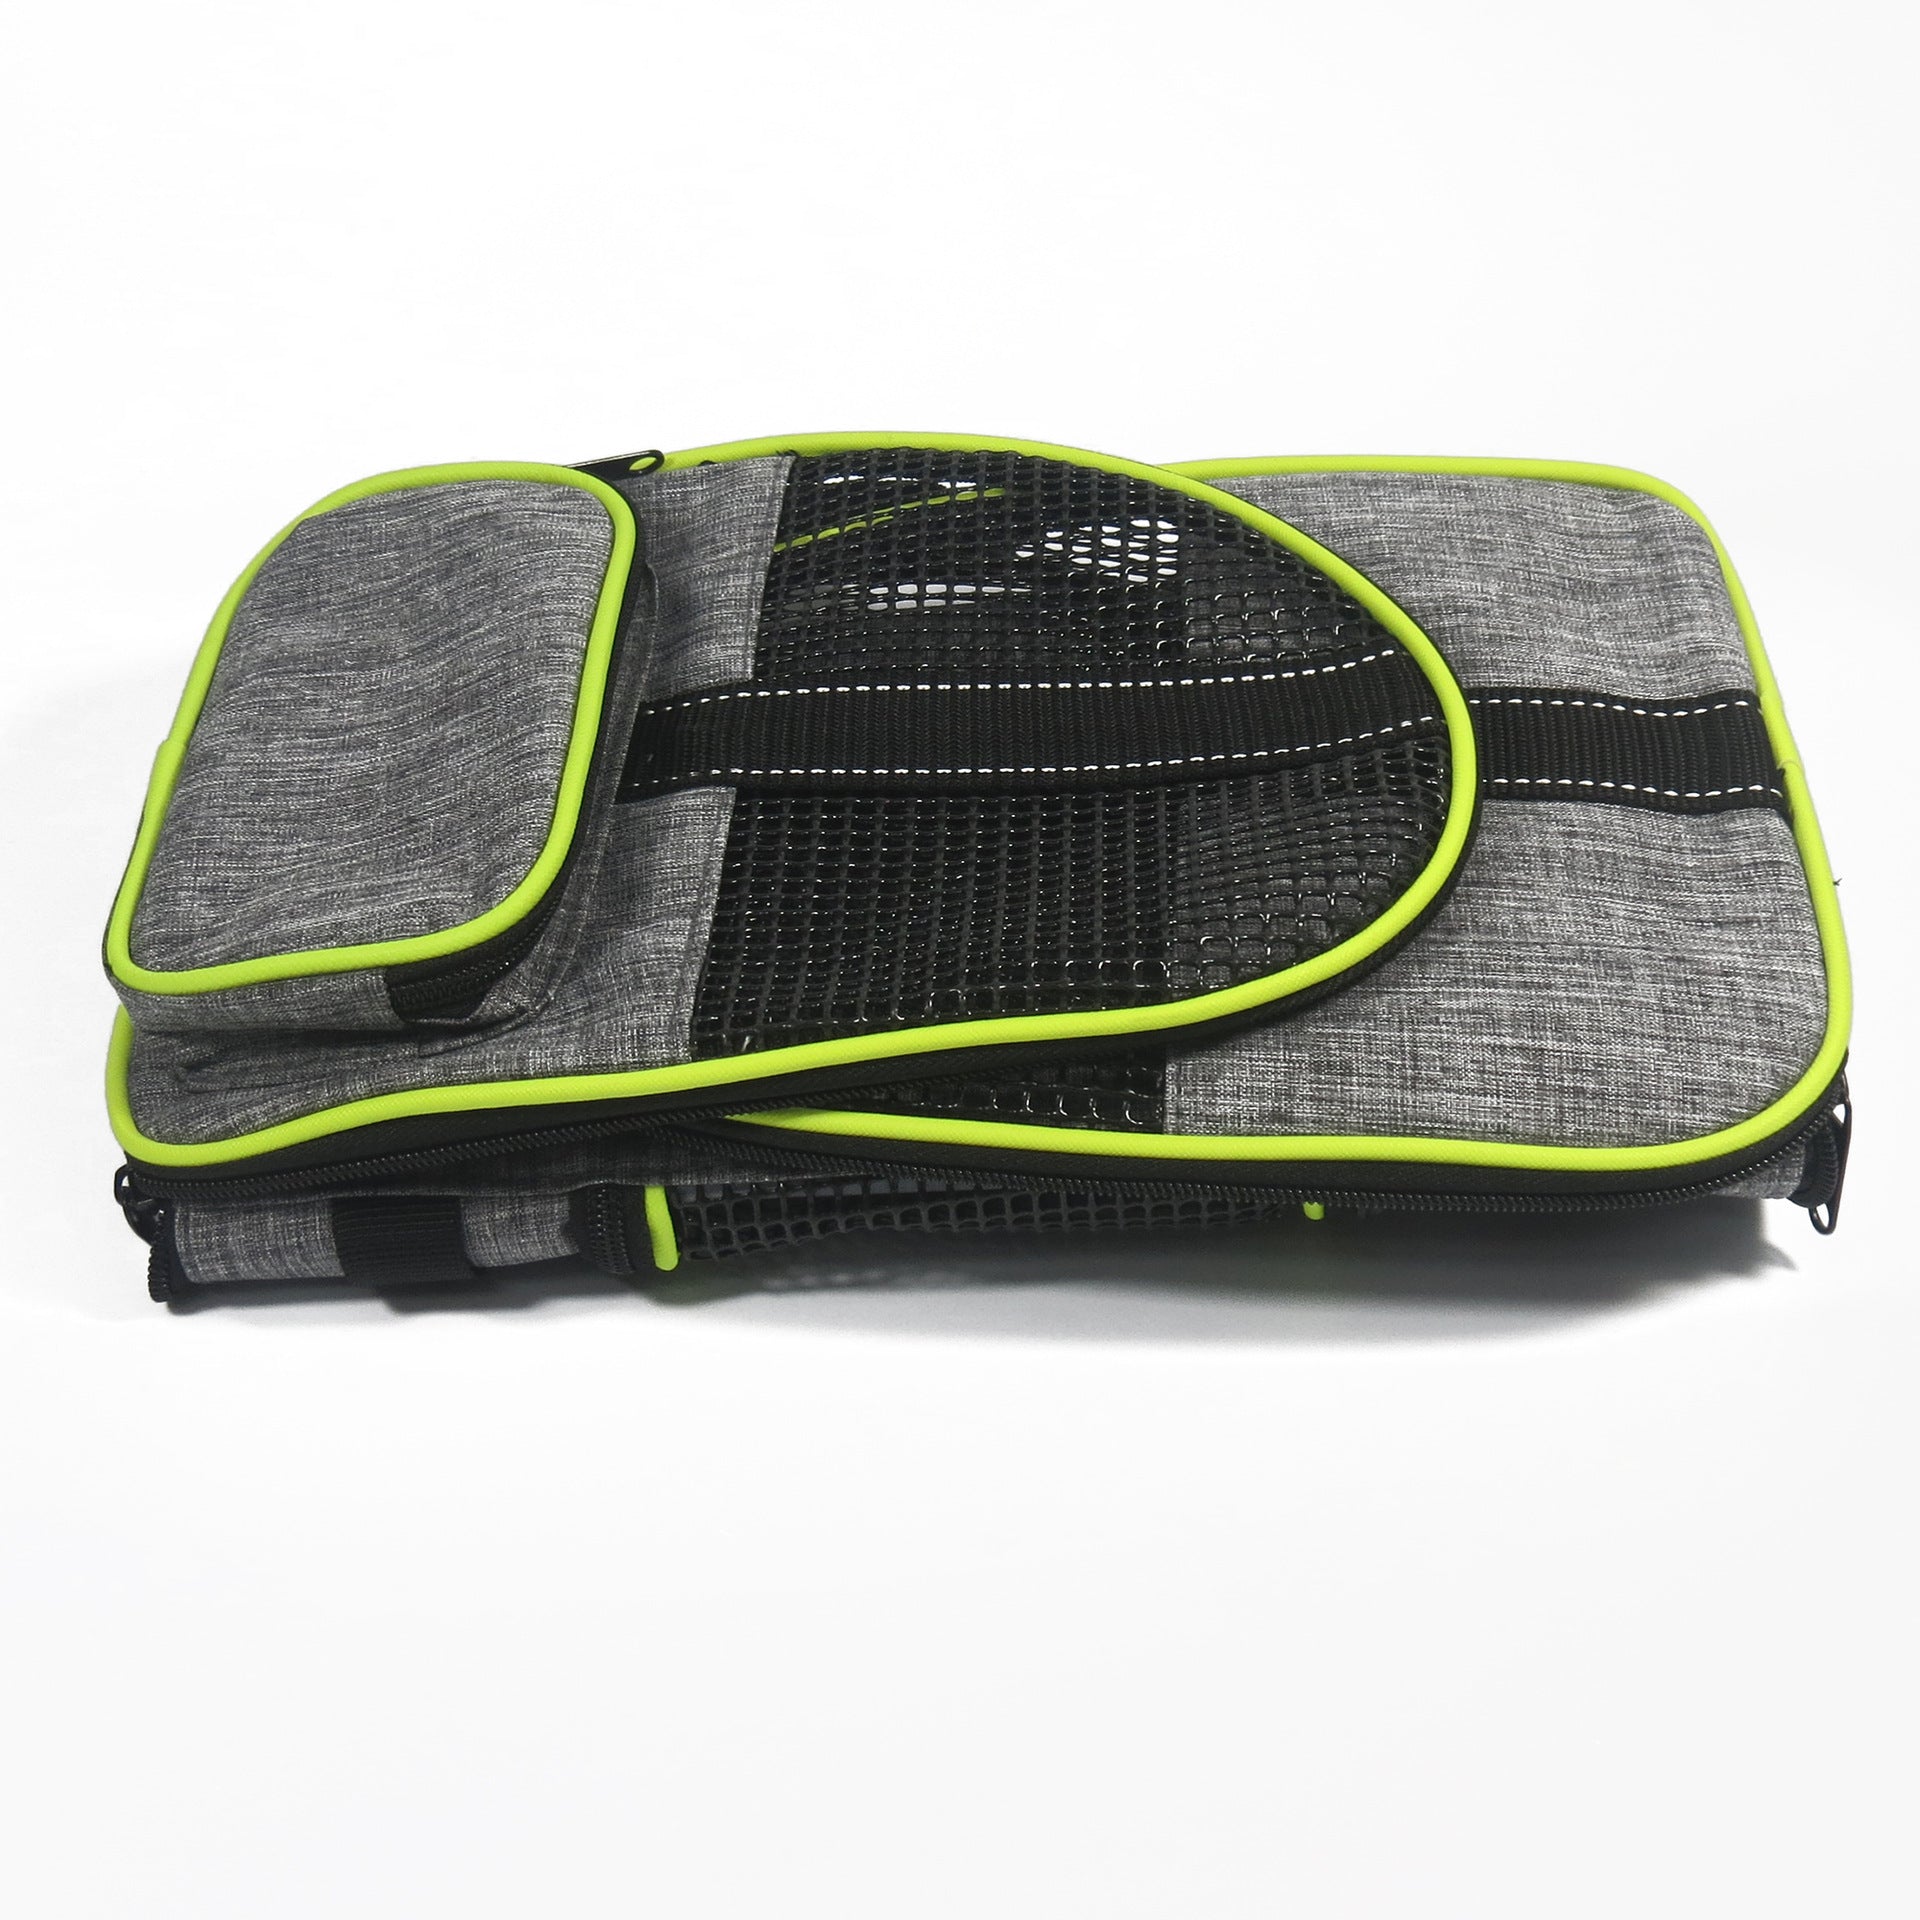 Multi-functional Folding Pet Puppy Dog Cat Car Seat Basket Pet Travel Carrier Bag